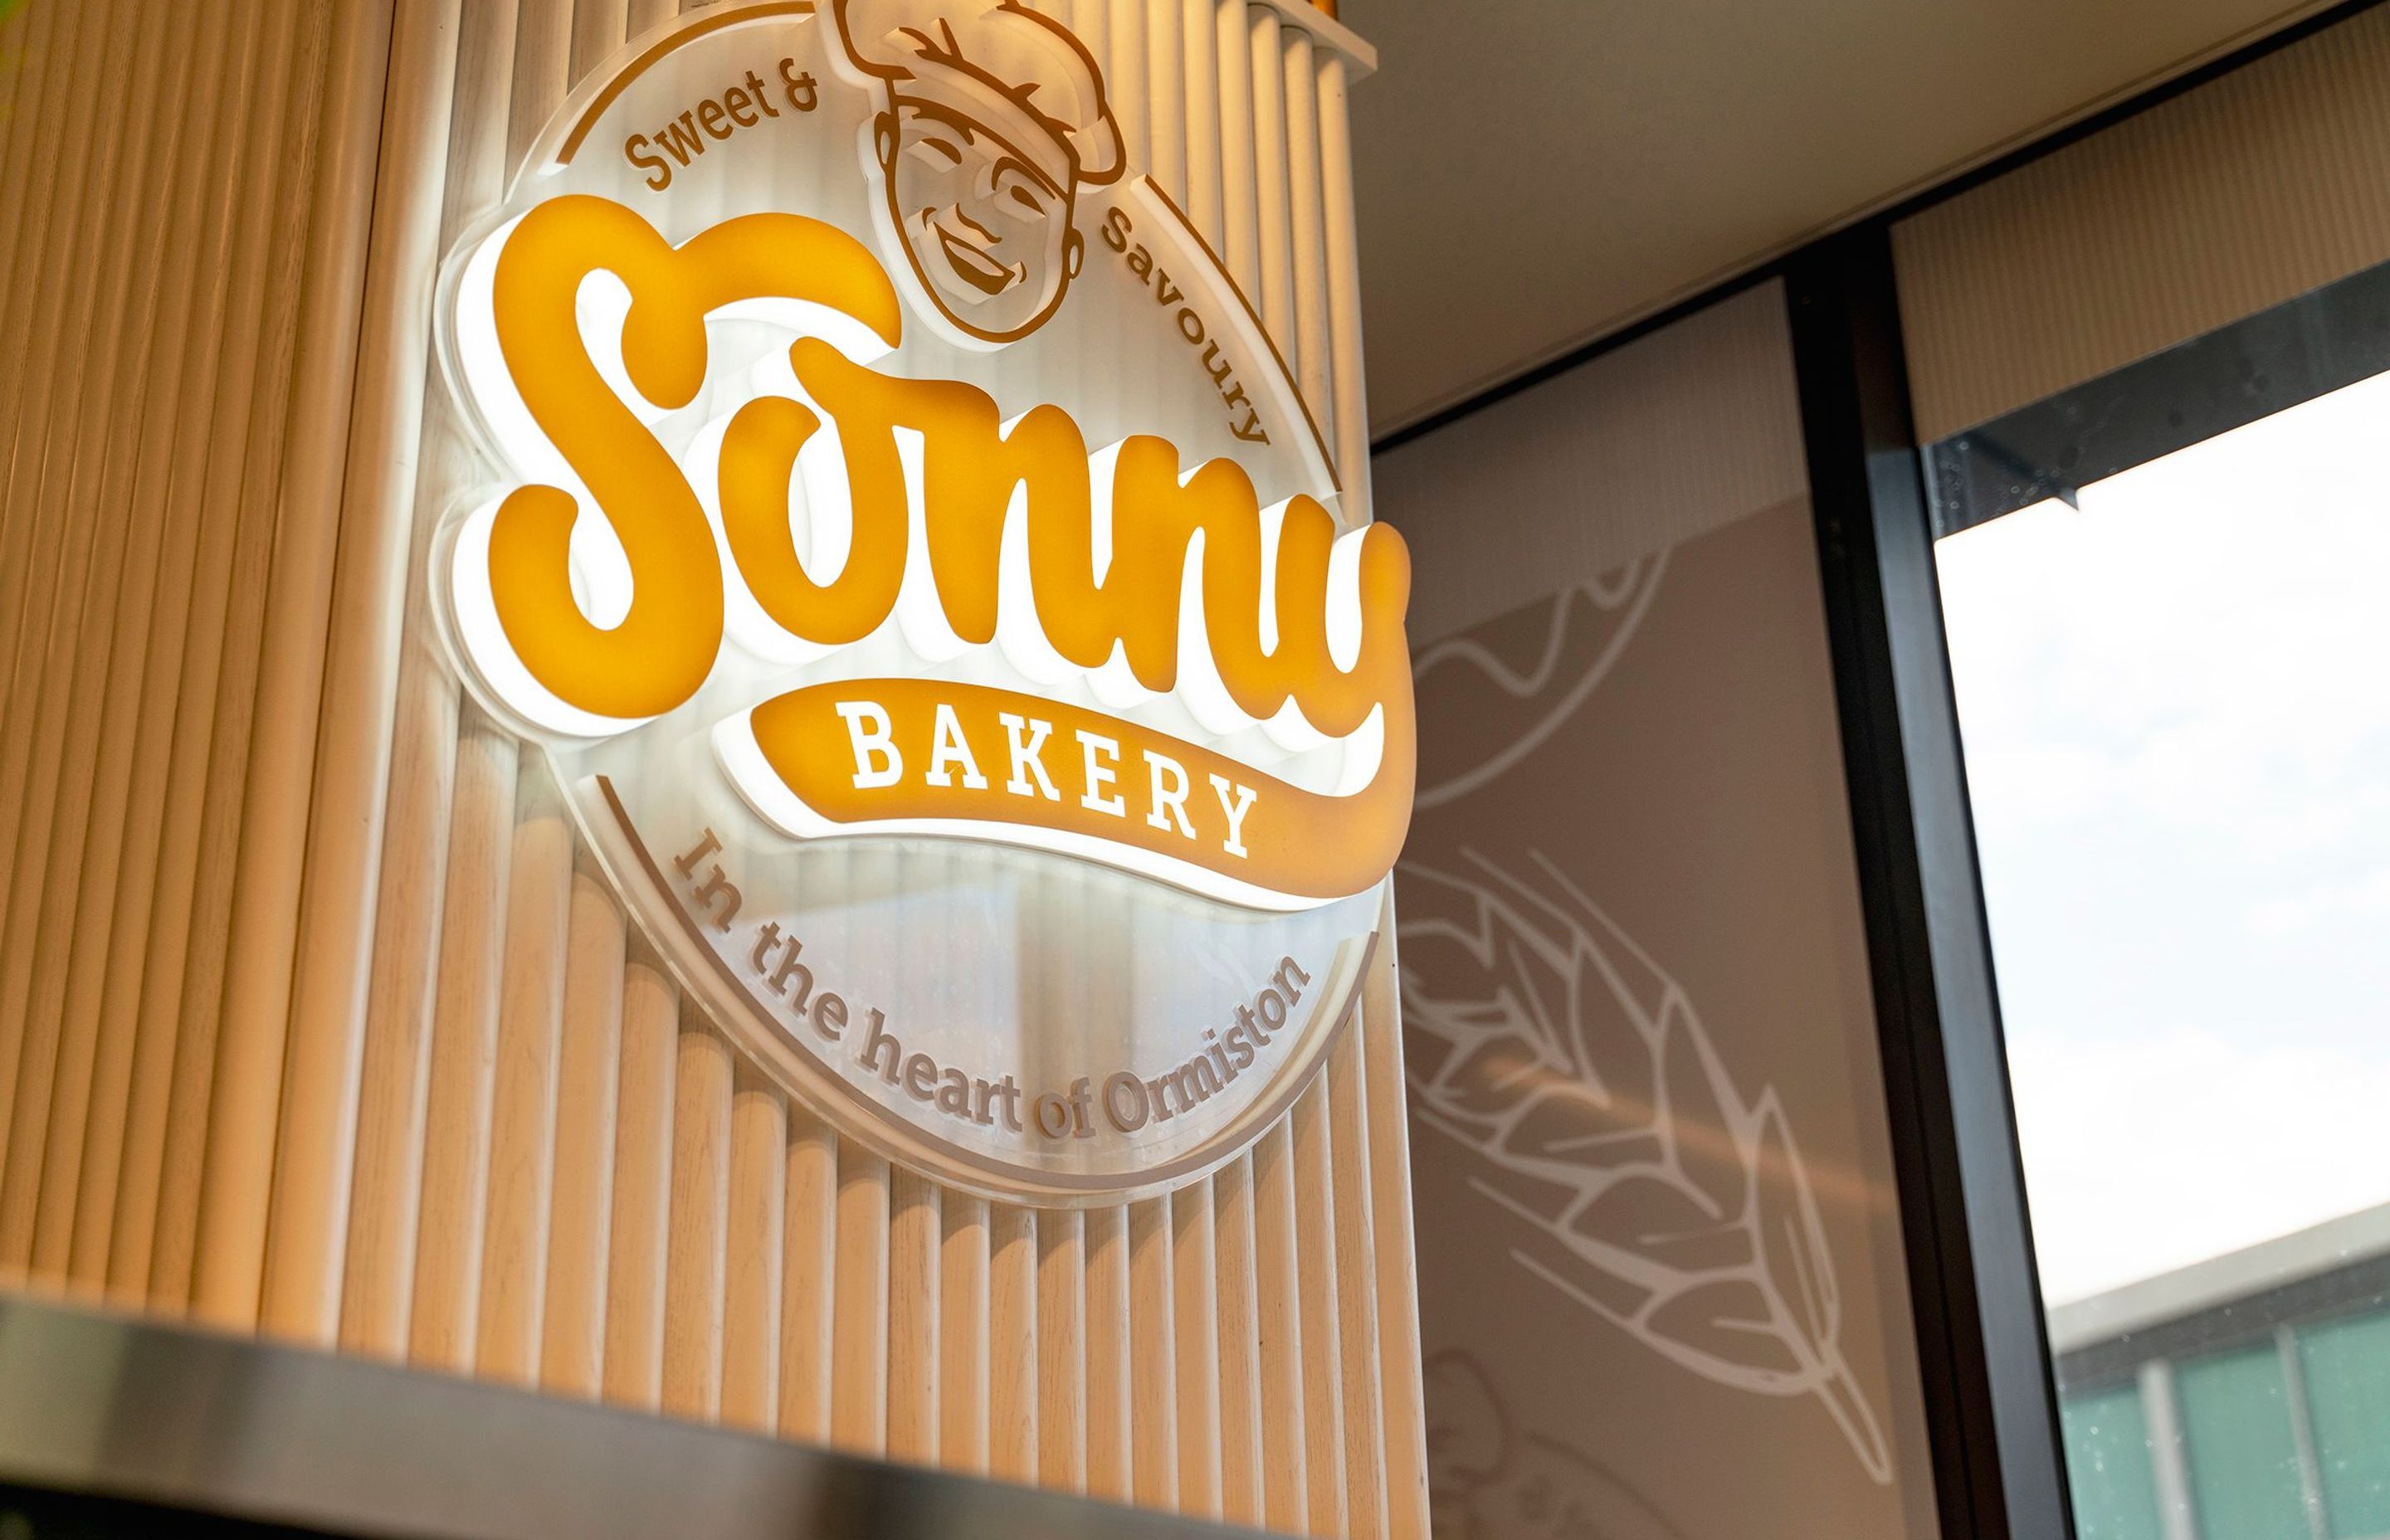 Sonny Bakery